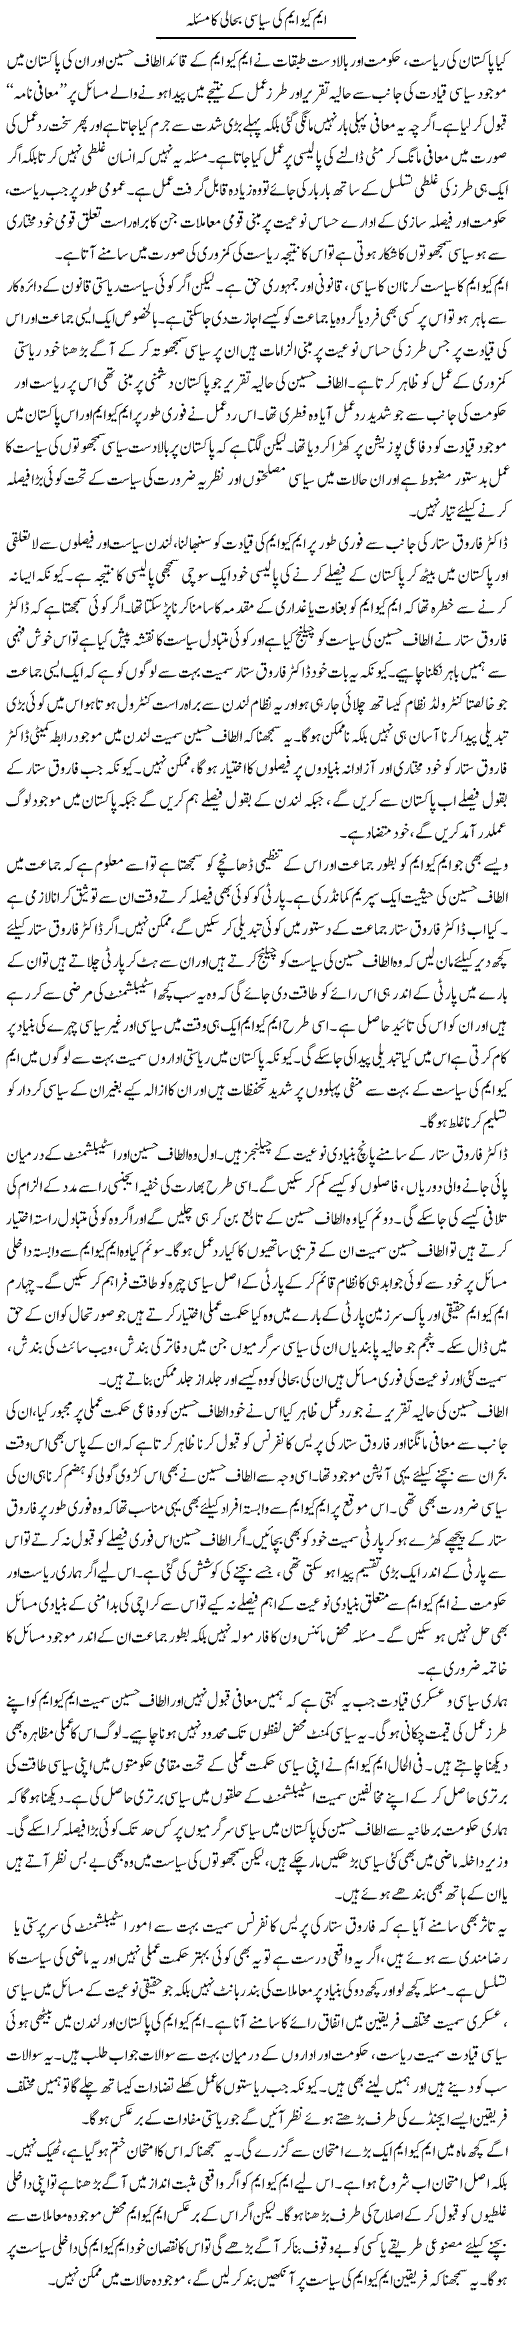 MQM ki siasi mahali ka masla | Salman Abid | Daily Urdu Columns